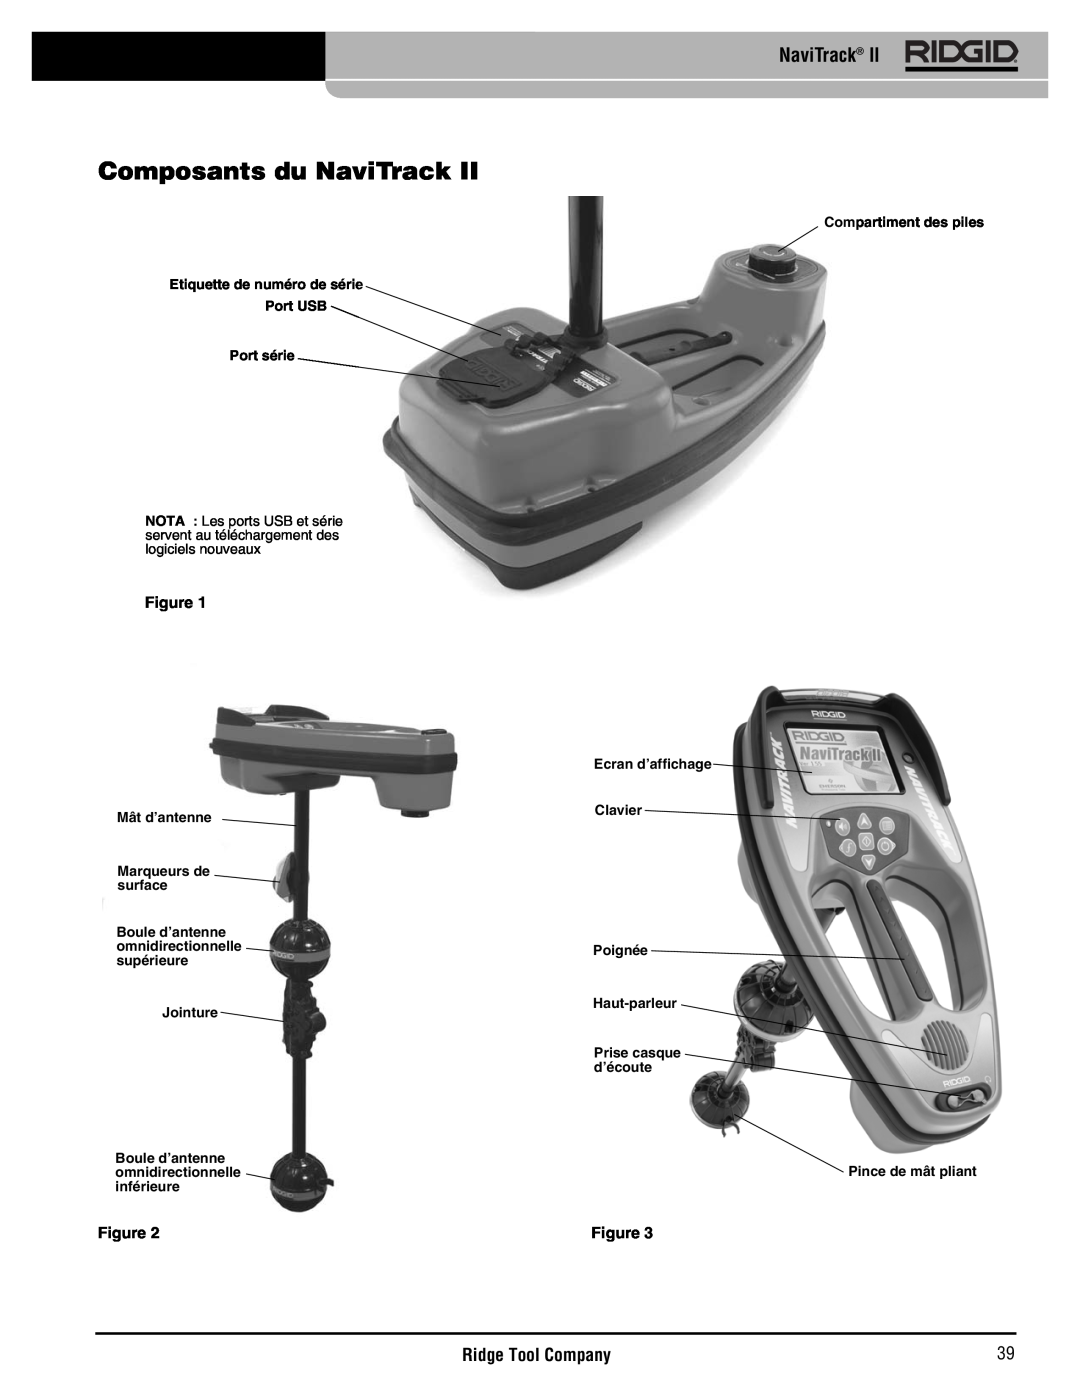 RIDGID Metal Detector manual Composants du NaviTrack, Ridge Tool Company 